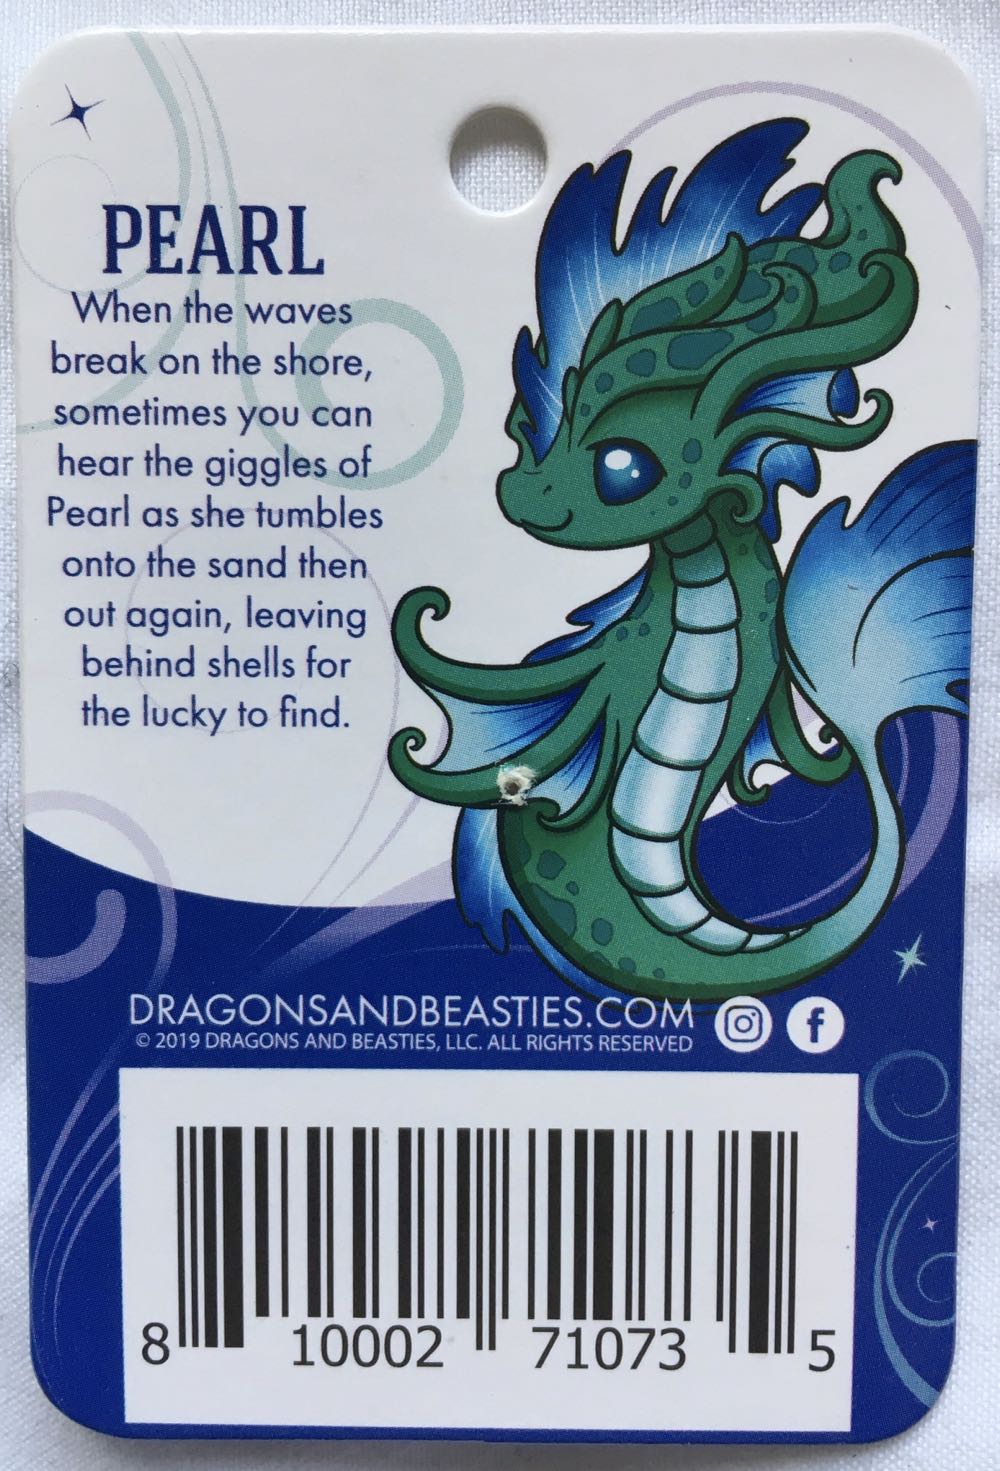 D&B Pearl (Water) Elemental Dragons - Enamel Pin pin collectible [Barcode 810002710735] - Main Image 2